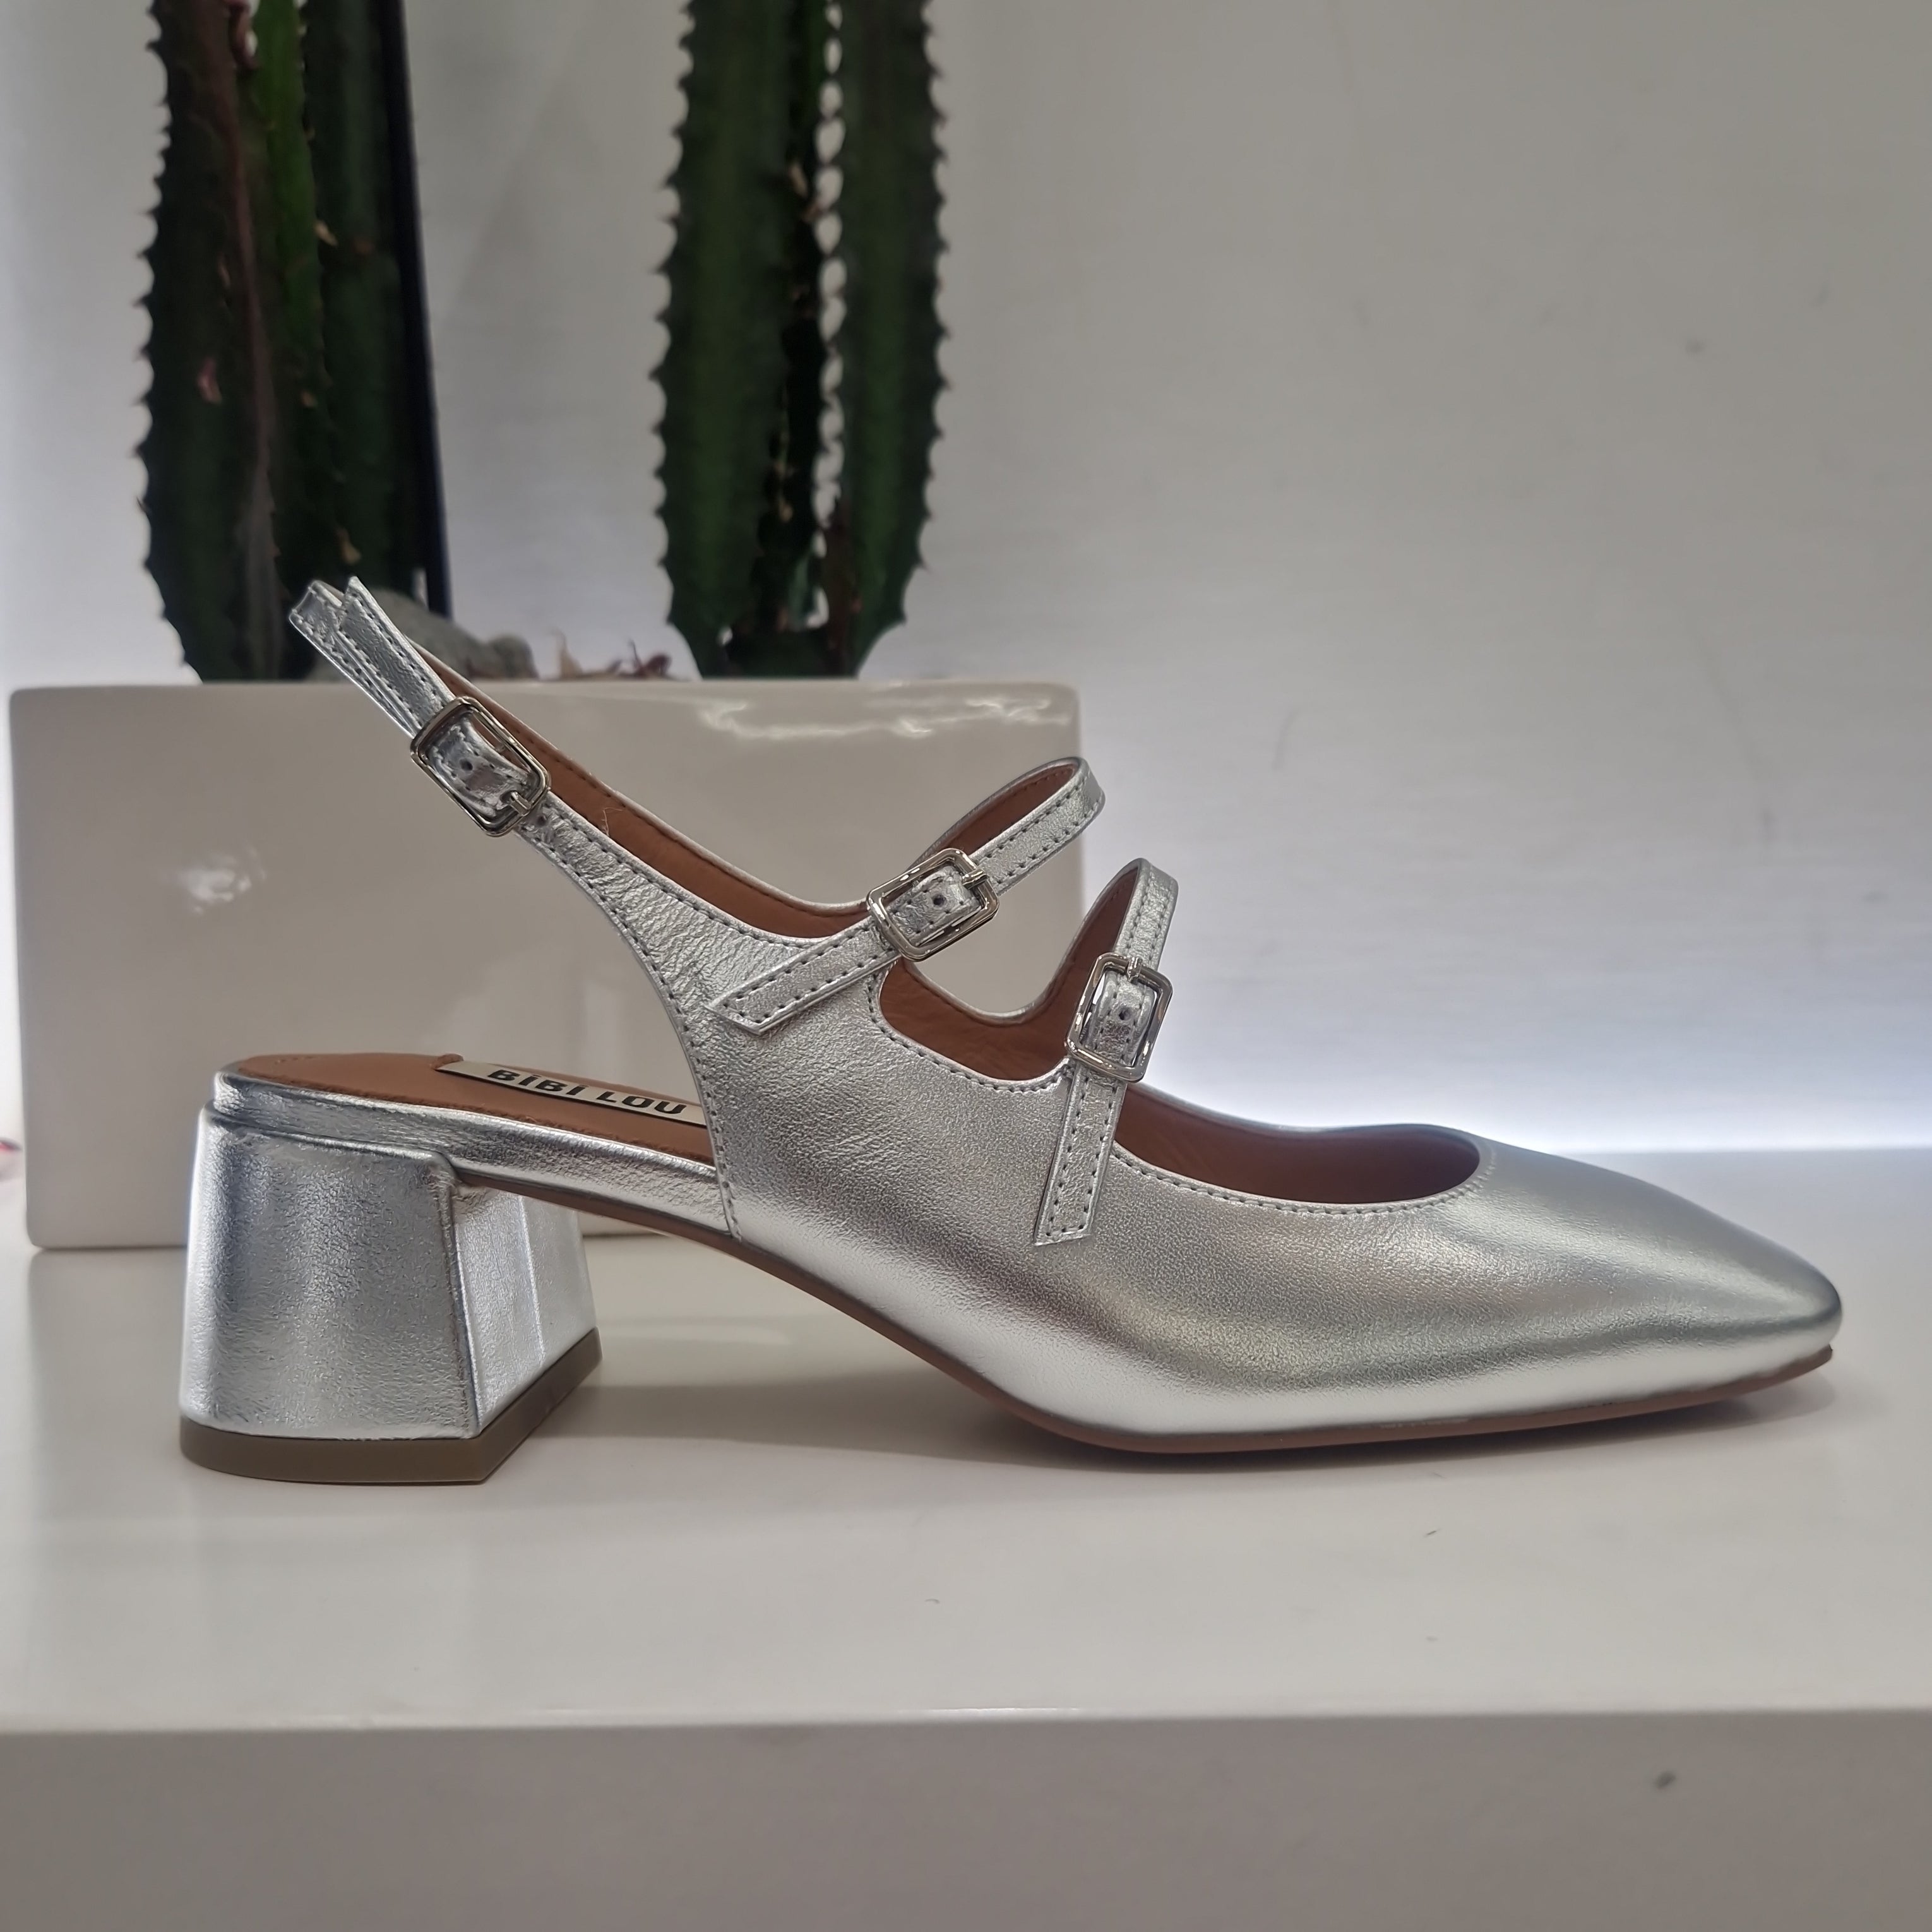 Bibilou scarpa argento tacco 5 cm